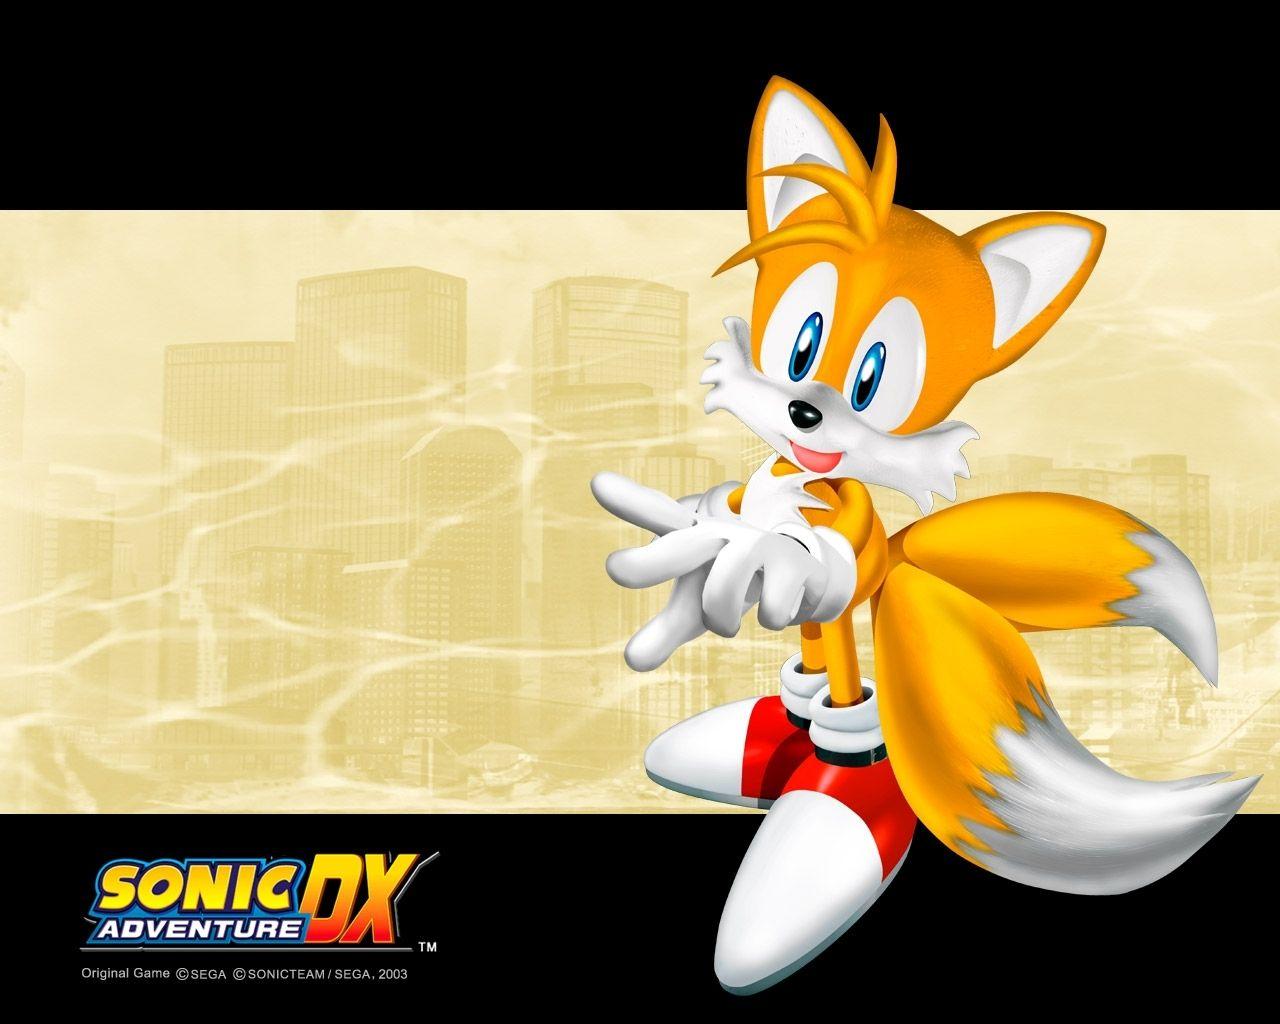 Sonic adventure dx online emulator